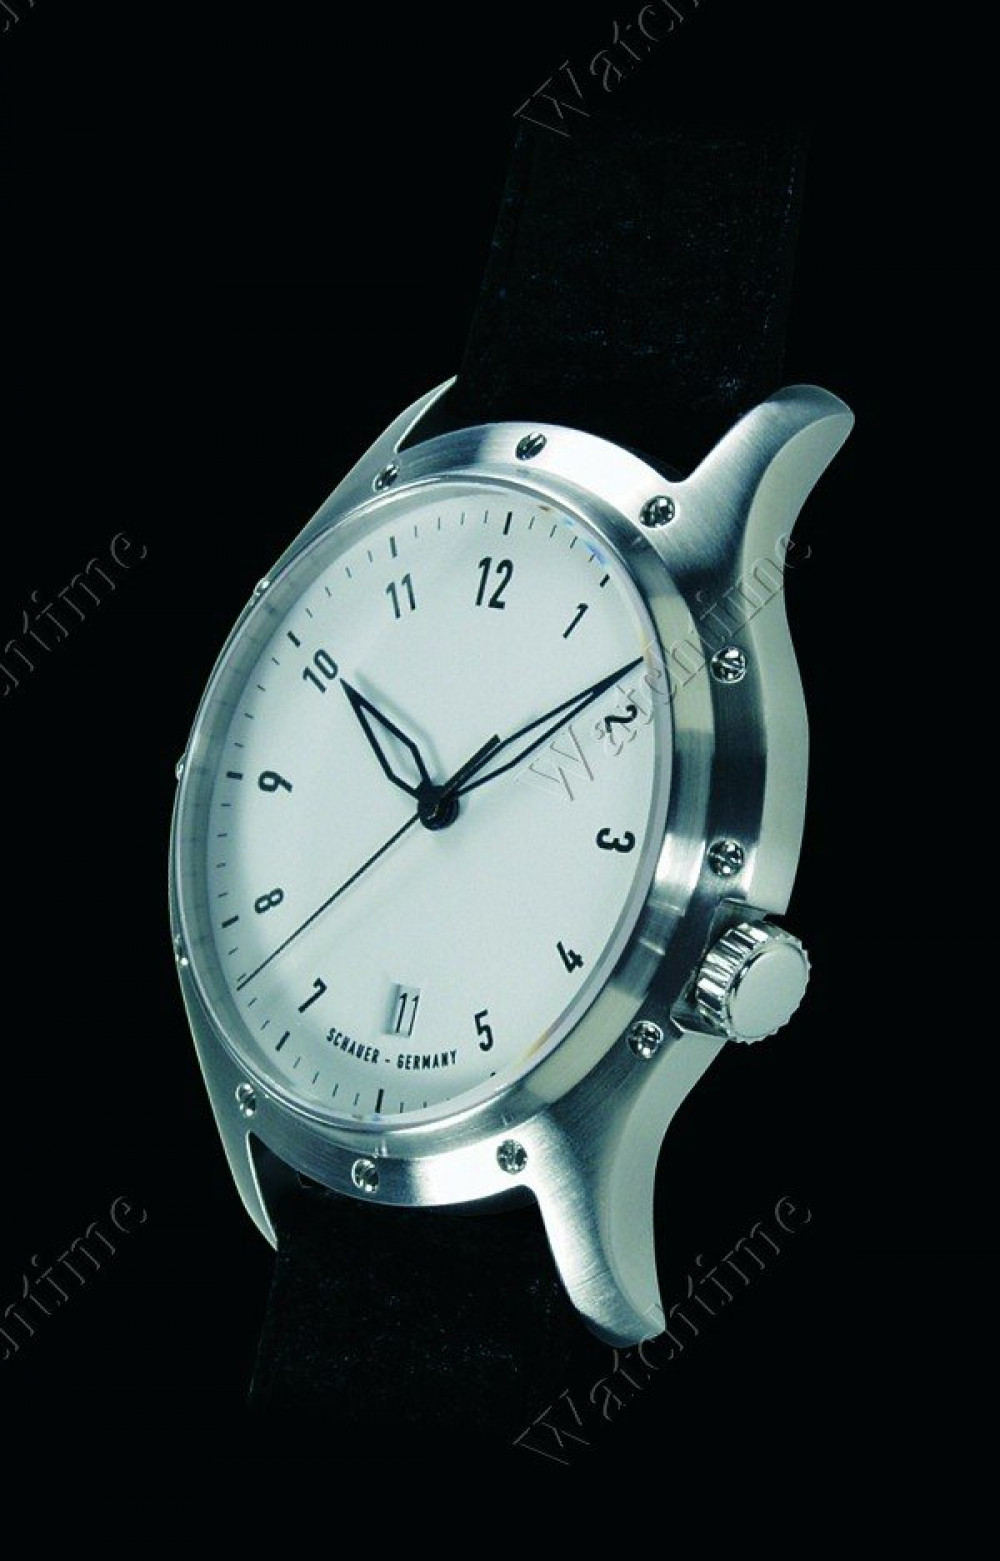 Zegarek firmy Schauer, model Automatik 2824